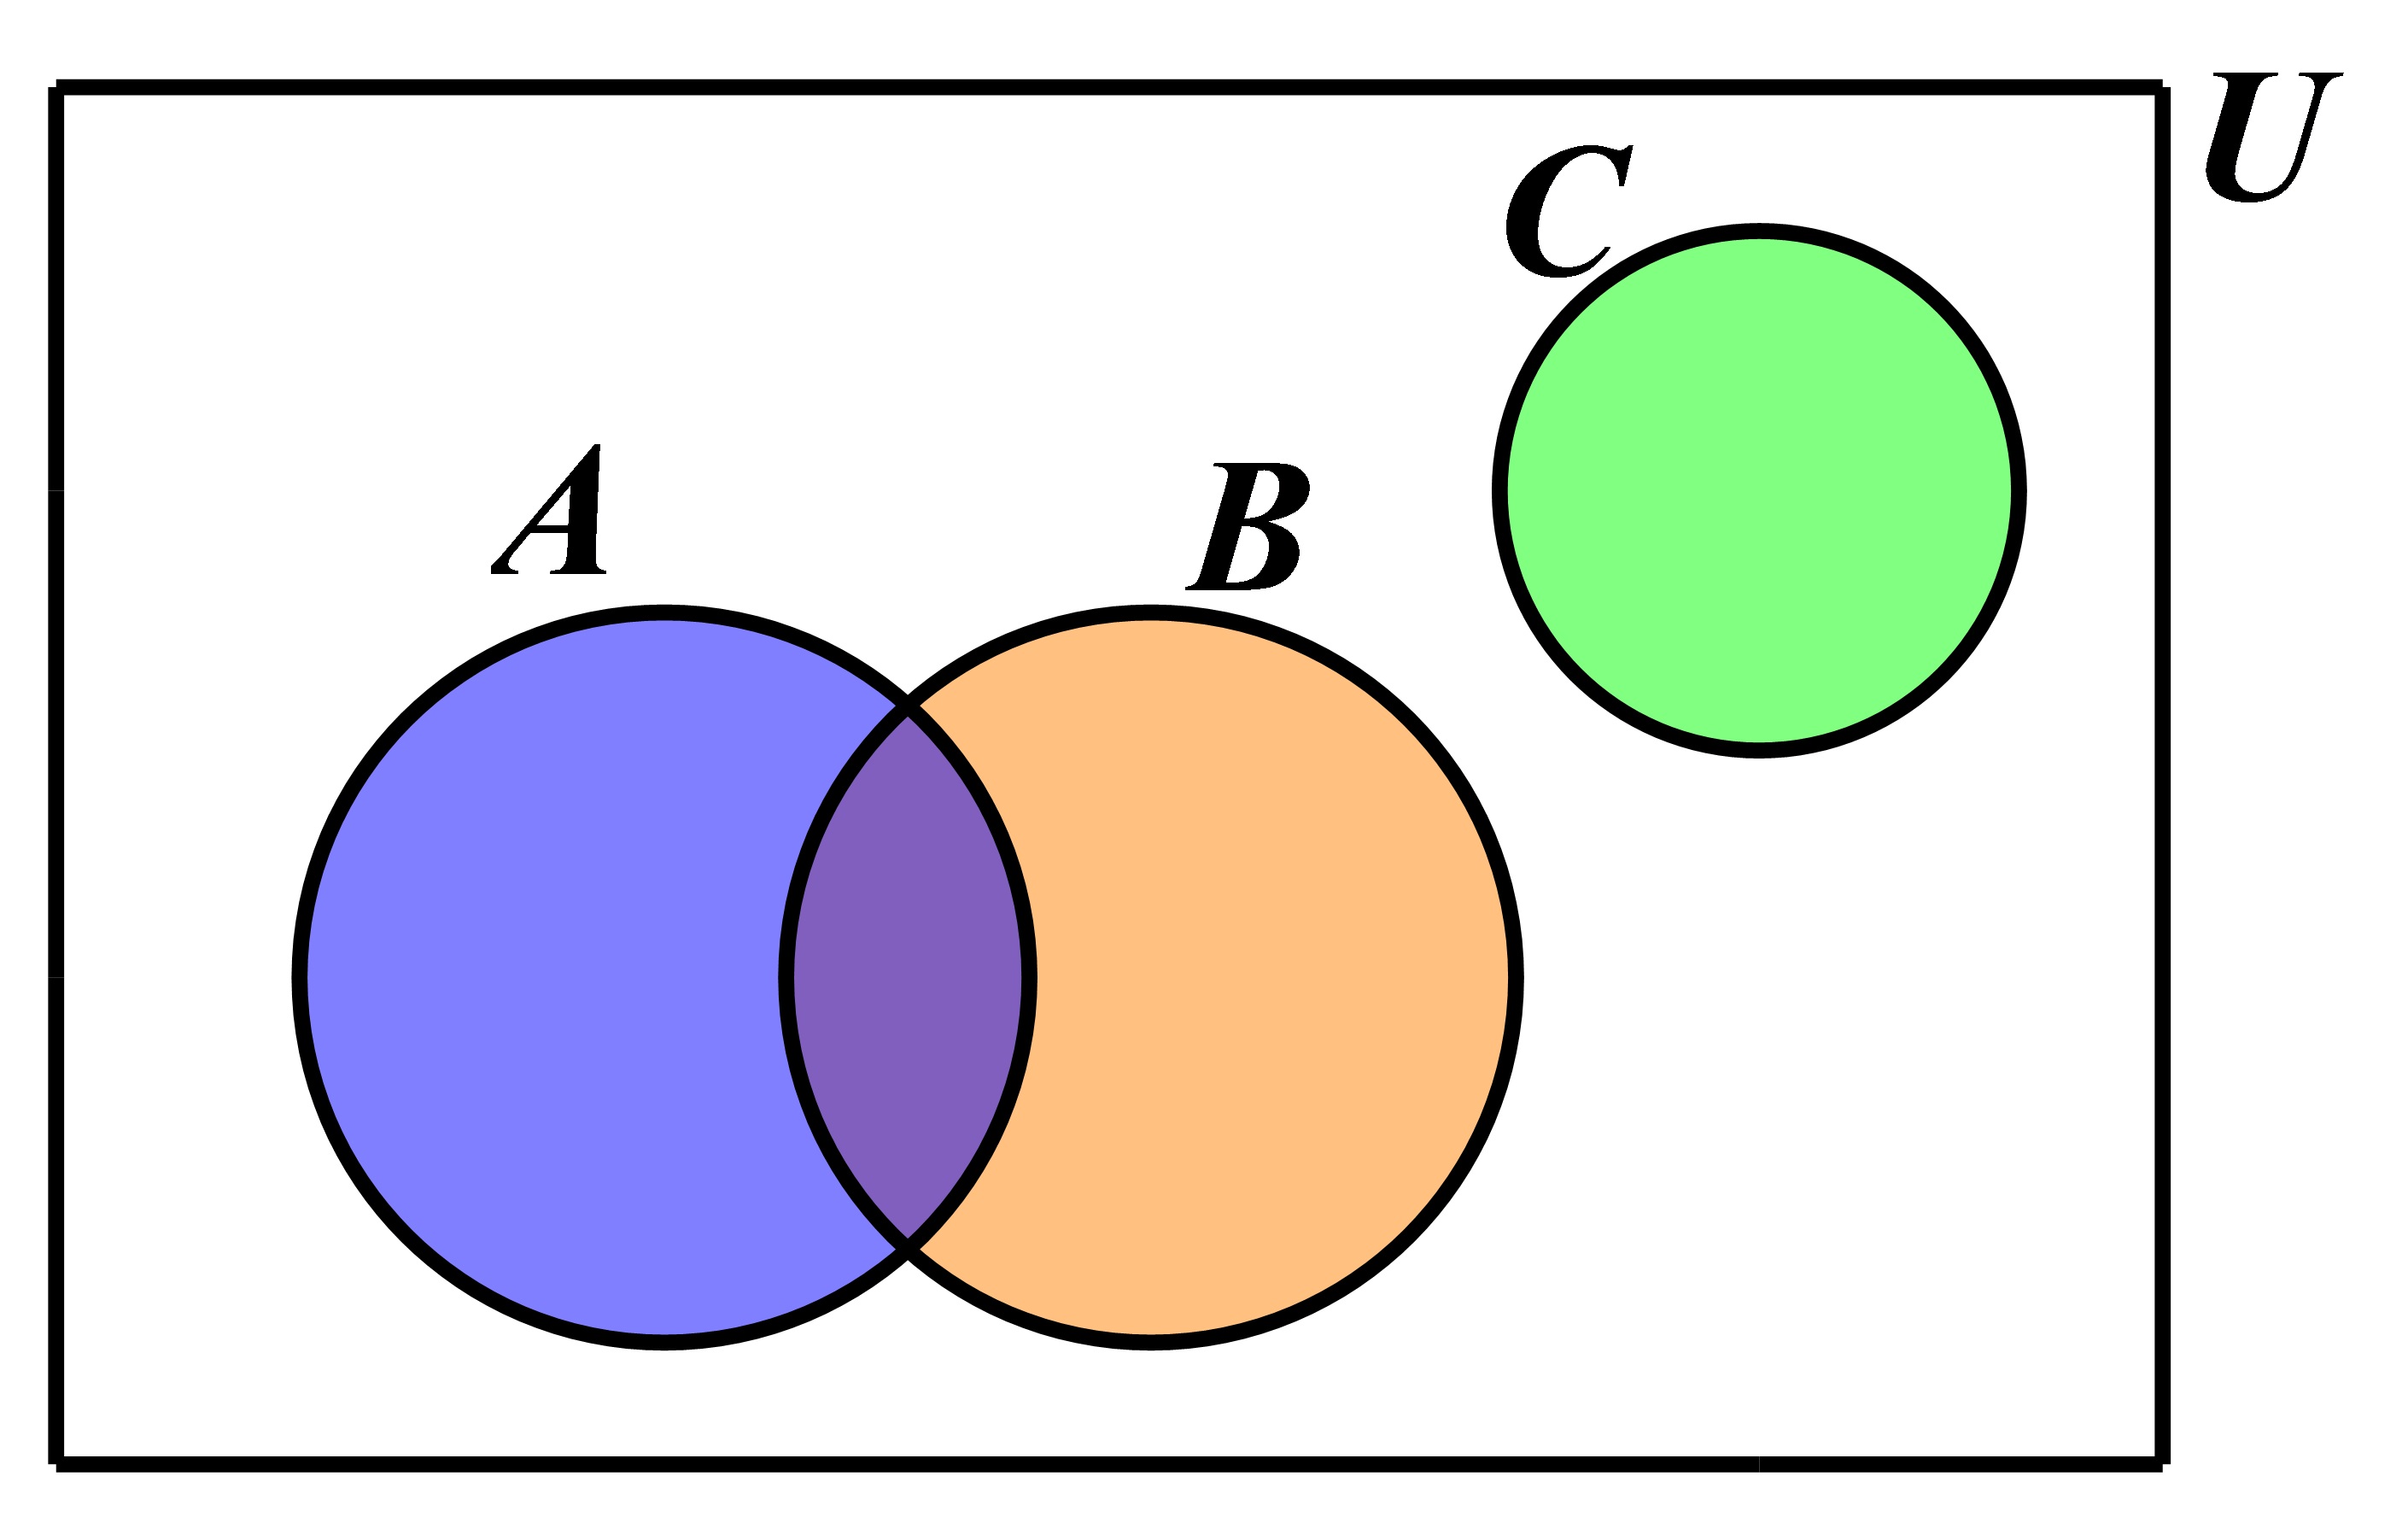 Na slici je nacrtan pravokutnik kao univerzalni skup, a unutar njega skupovi A, B i C predstavljaju tri njegova podskupa.